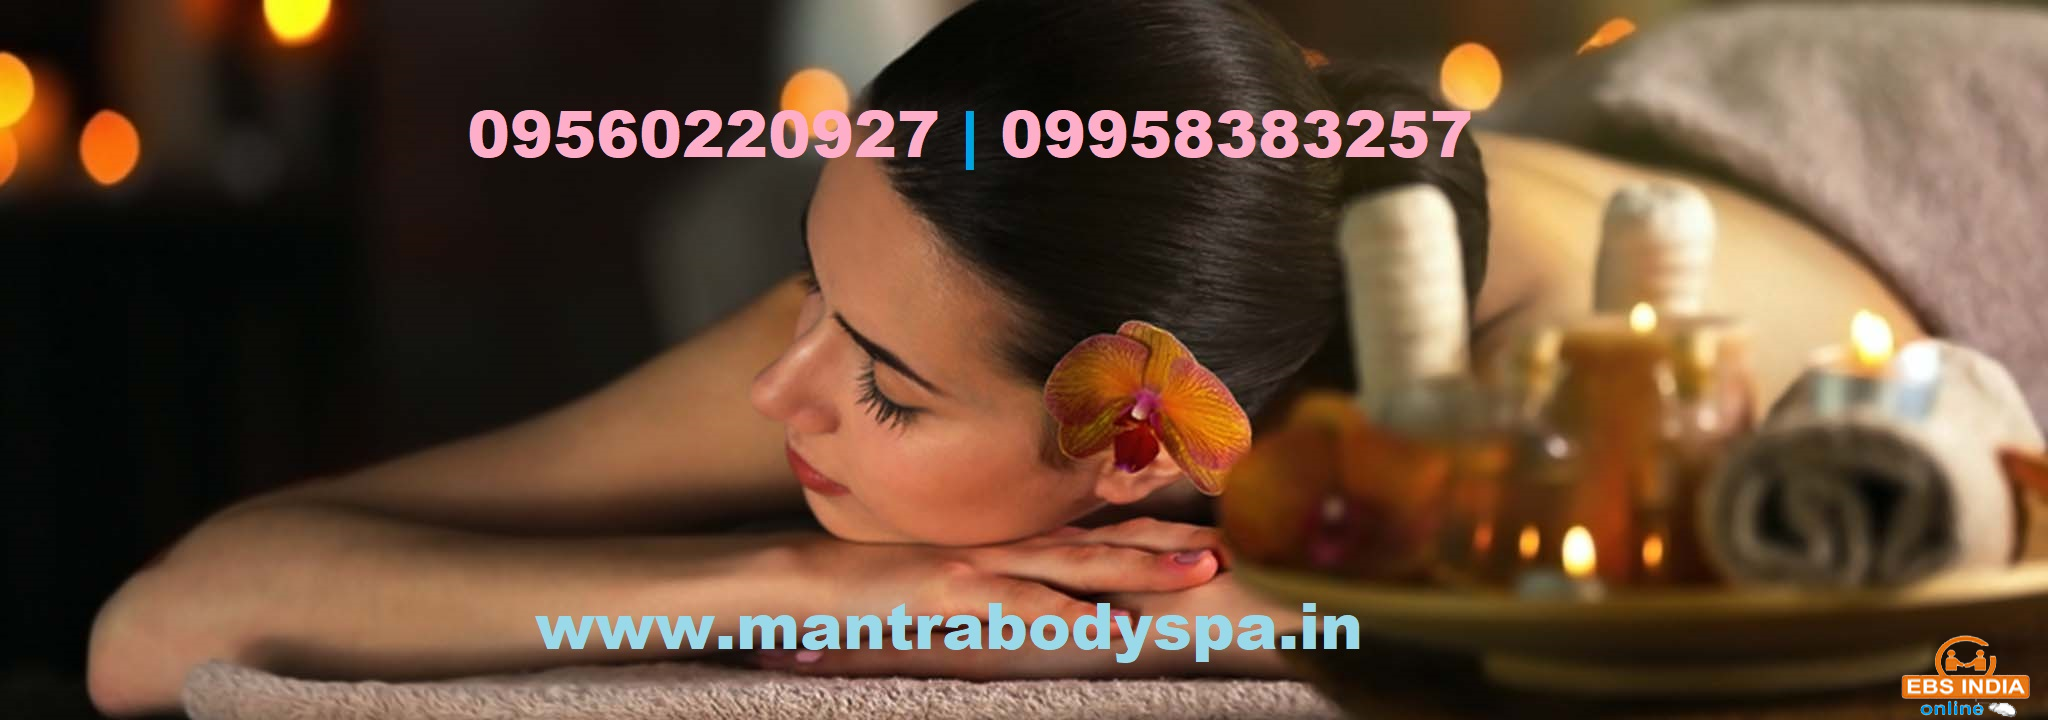 Full Body to Body Massage in Delhi by Female